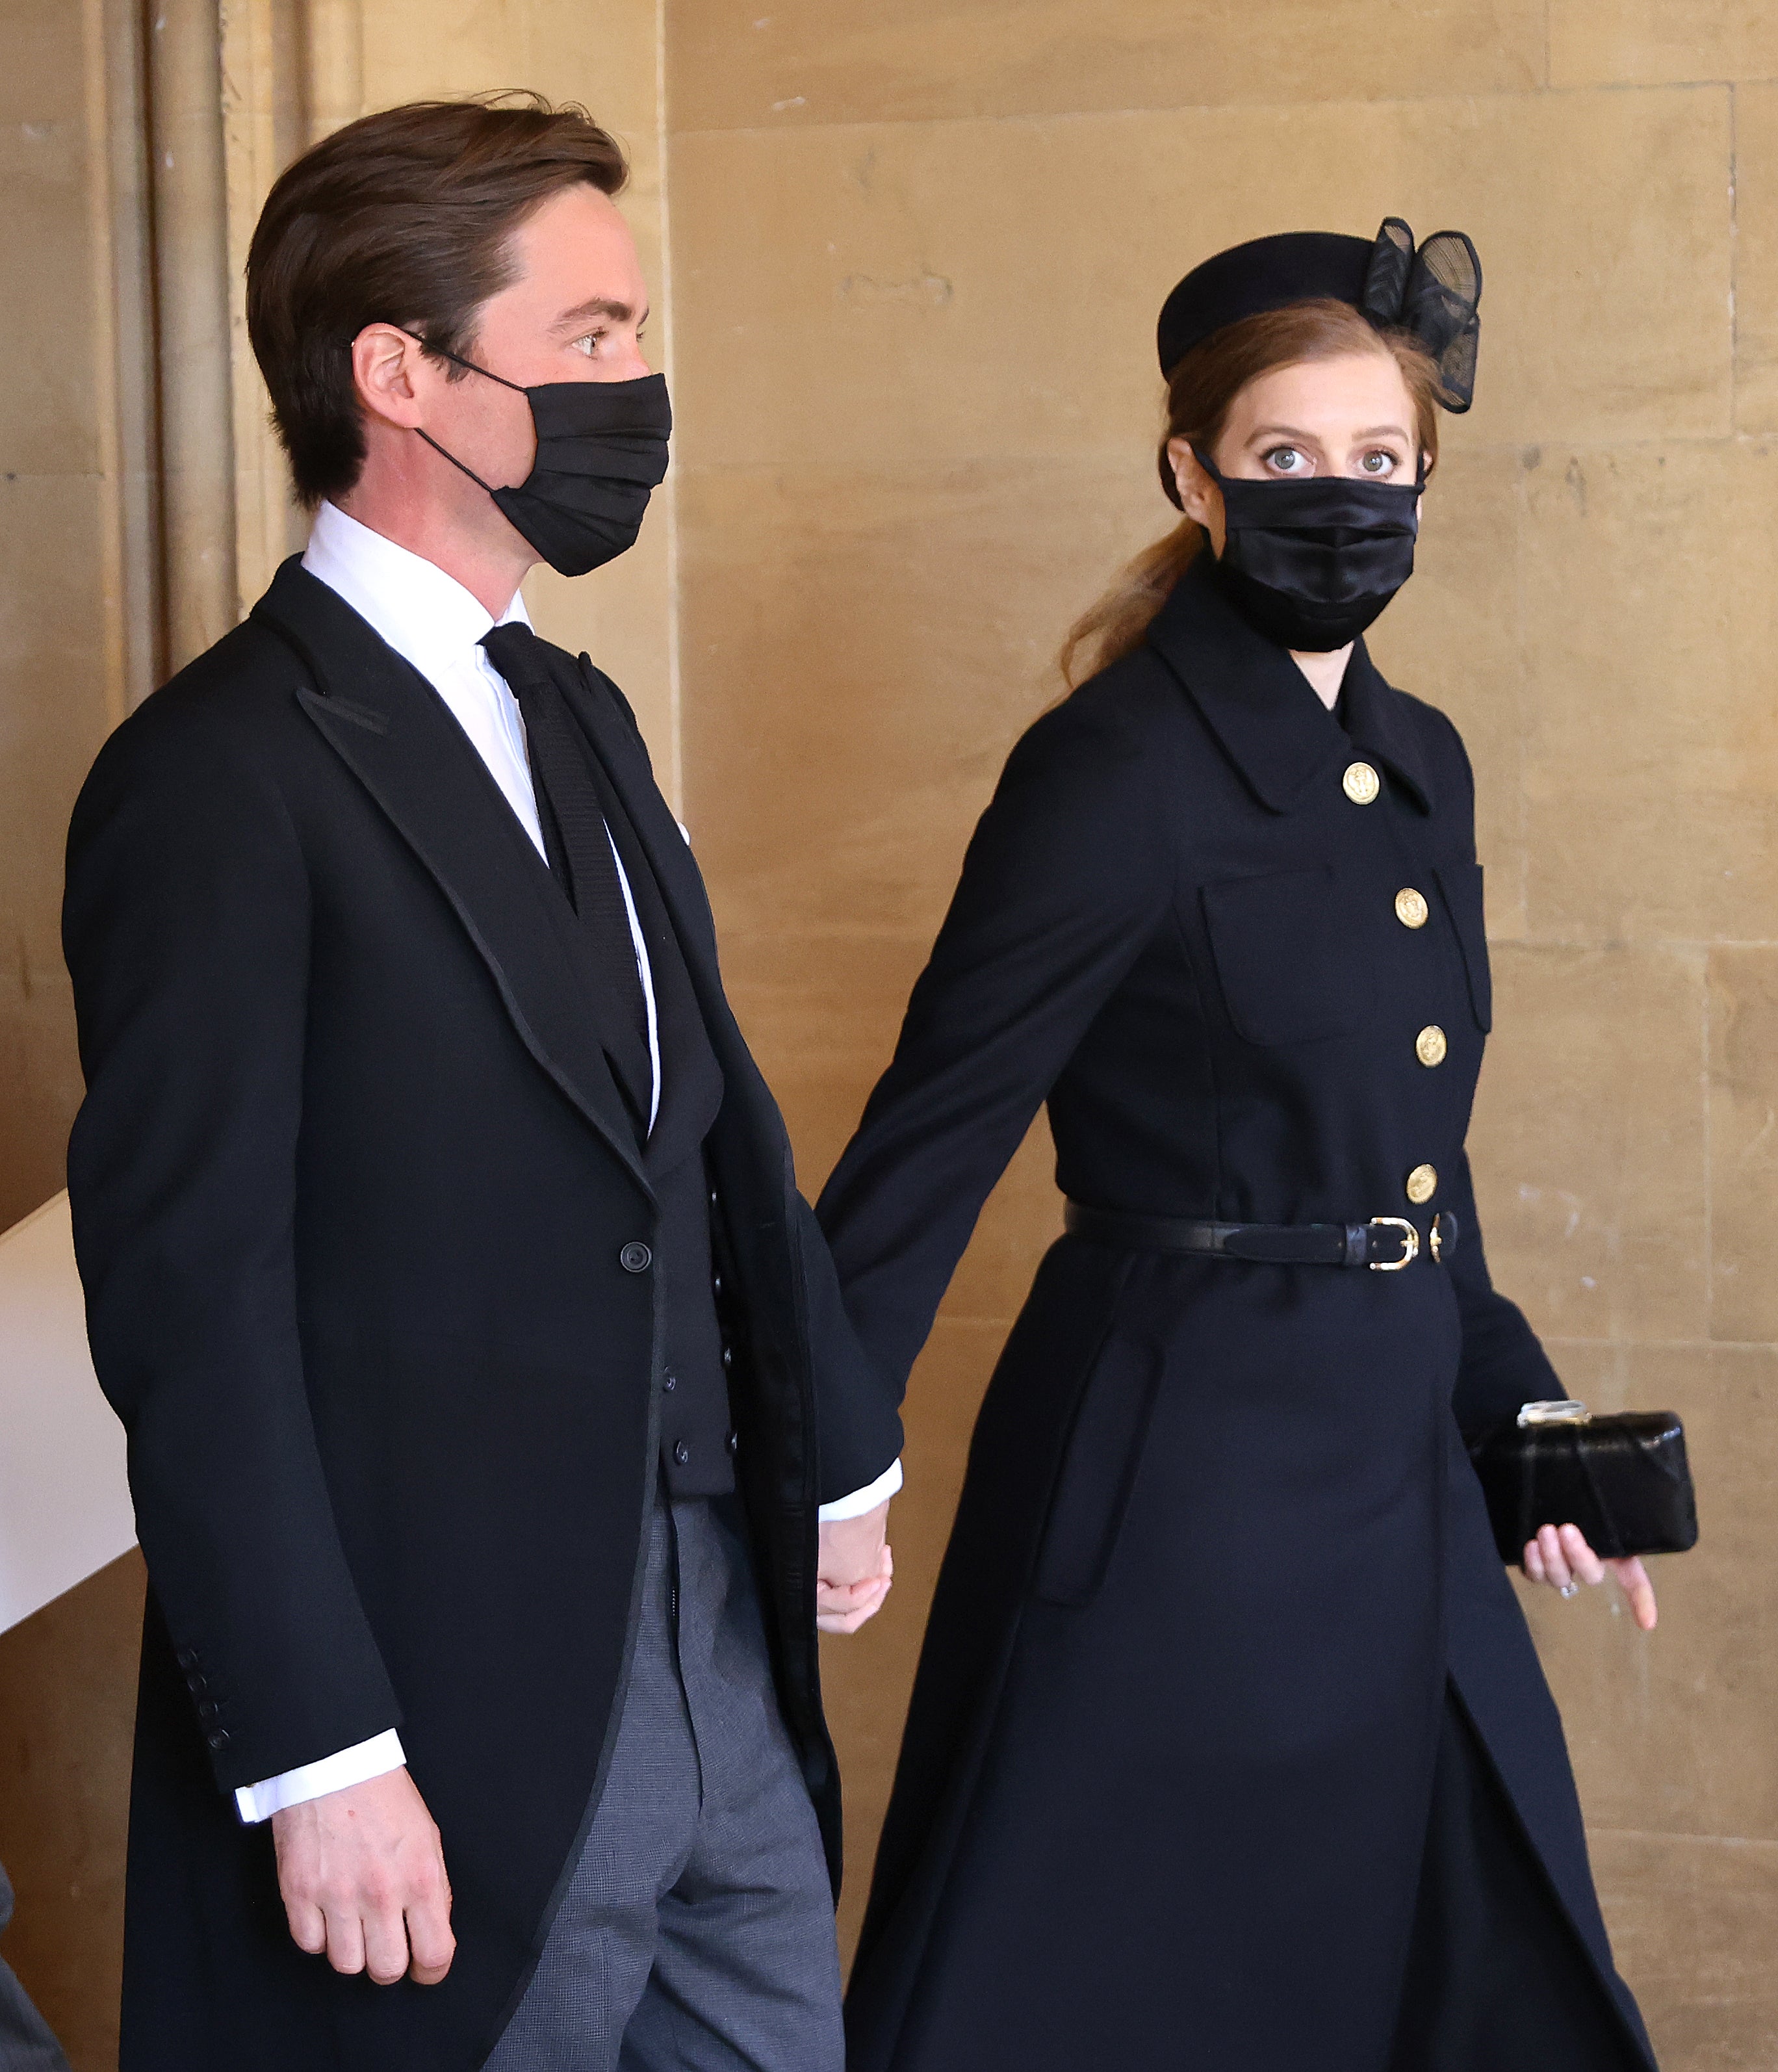 La princesa Beatrice y Edoardo Mapelli Mozzi se tomaron de la mano en el funeral del príncipe Felipe